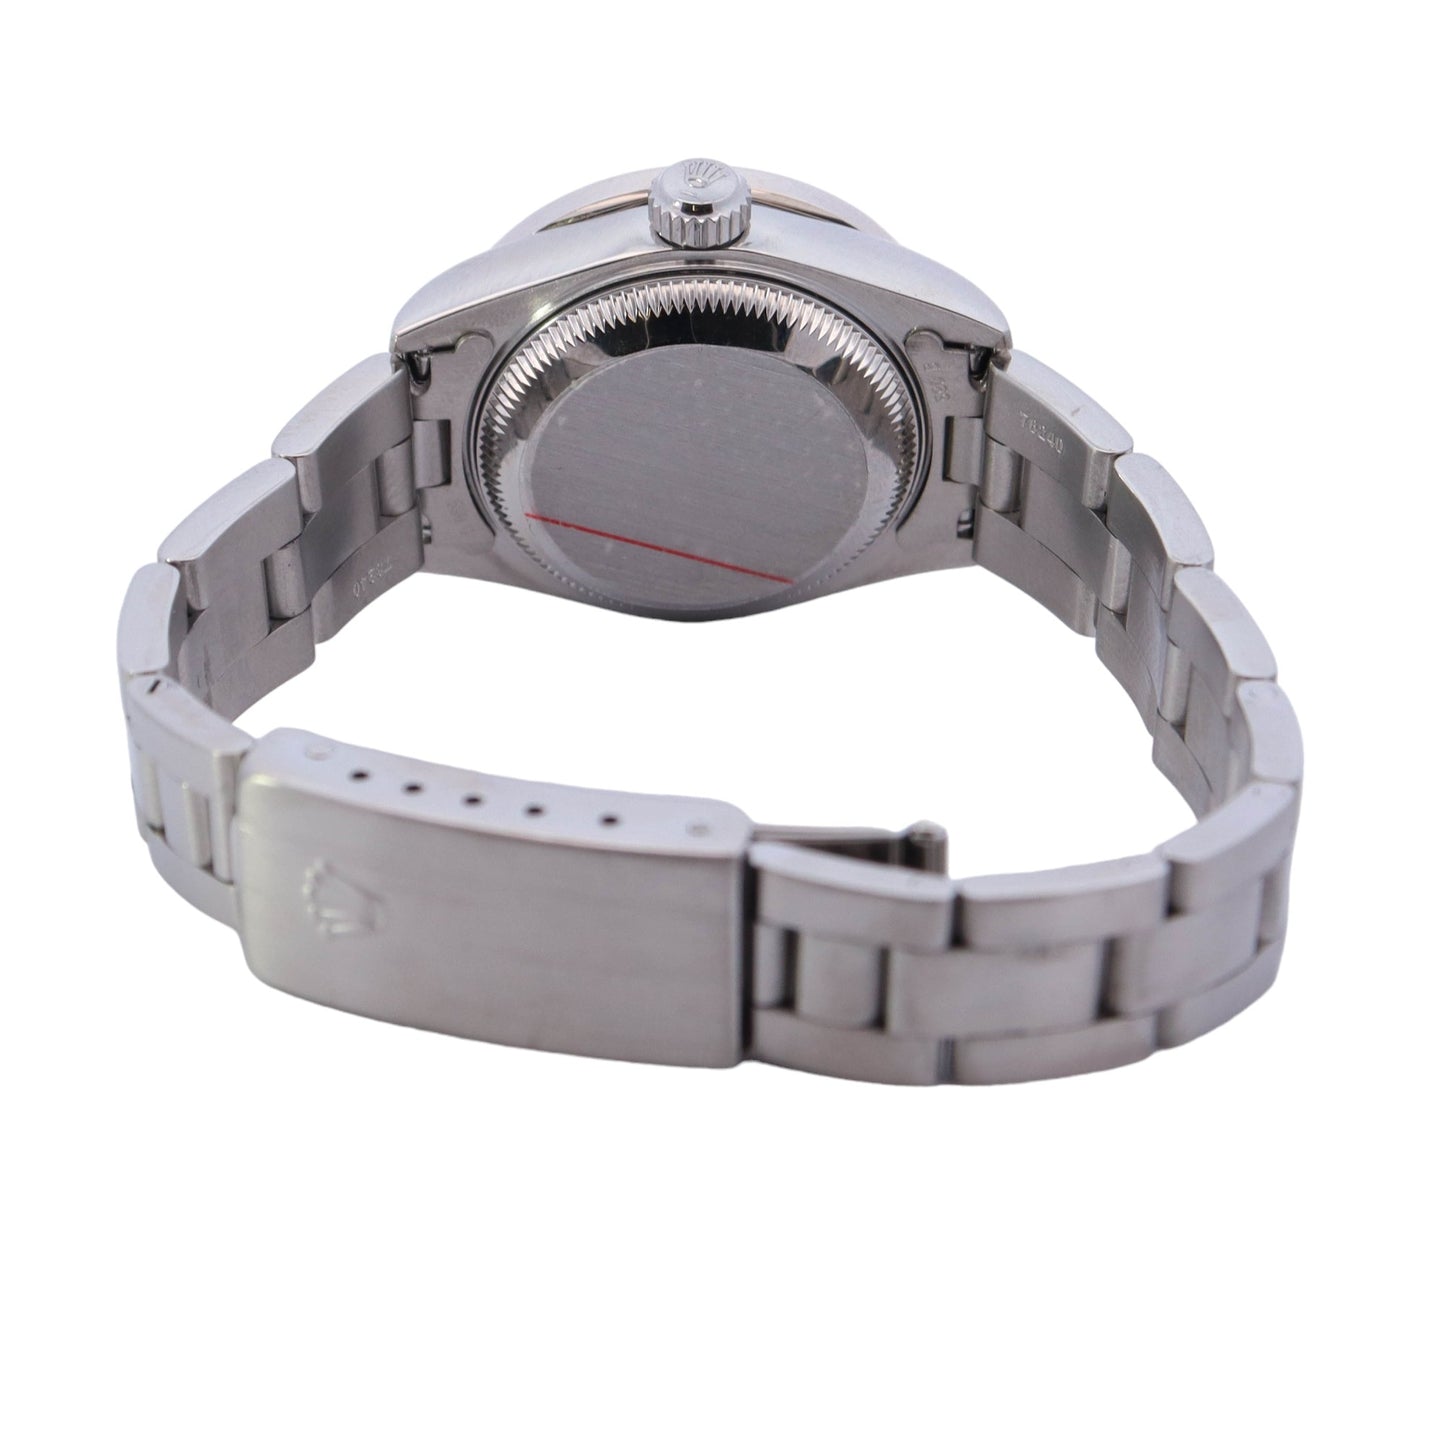 Rolex Datejust Stainless Steel 26mm Blue Stick Dial Watch Ref# 79160 - Happy Jewelers Fine Jewelry Lifetime Warranty